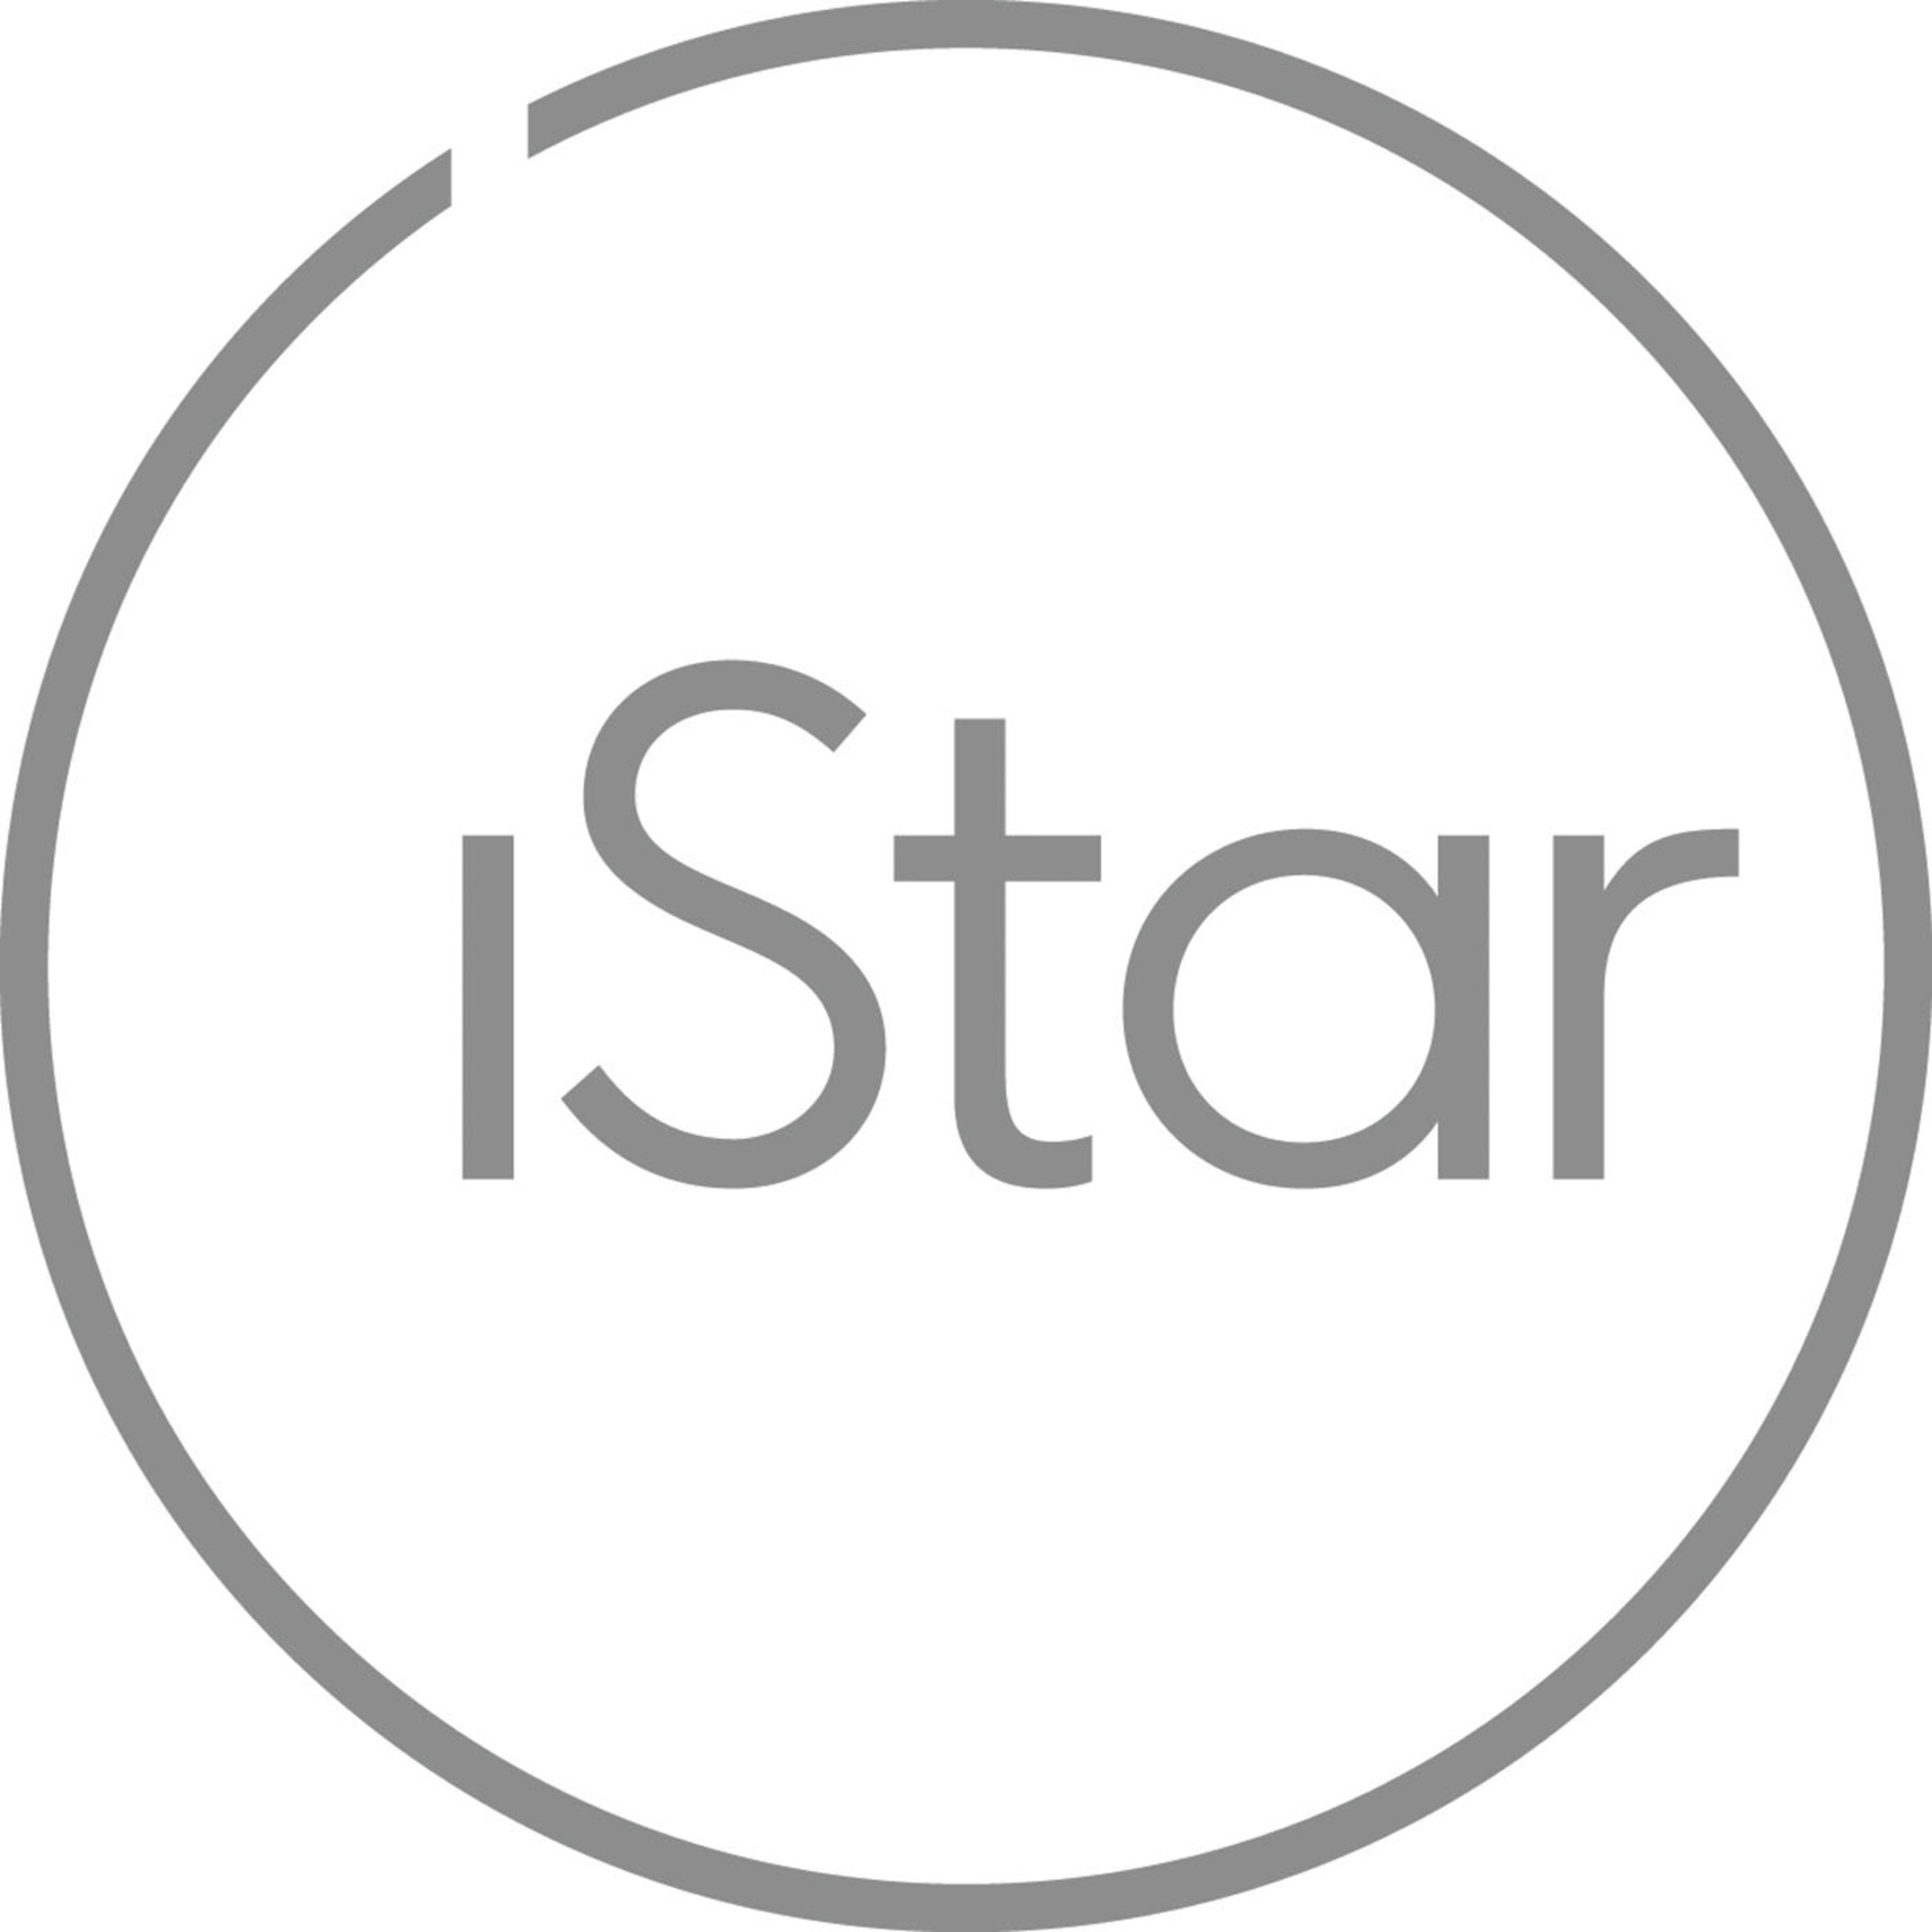 iStar logo. (PRNewsFoto/iStar Financial Inc.) (PRNewsFoto/)